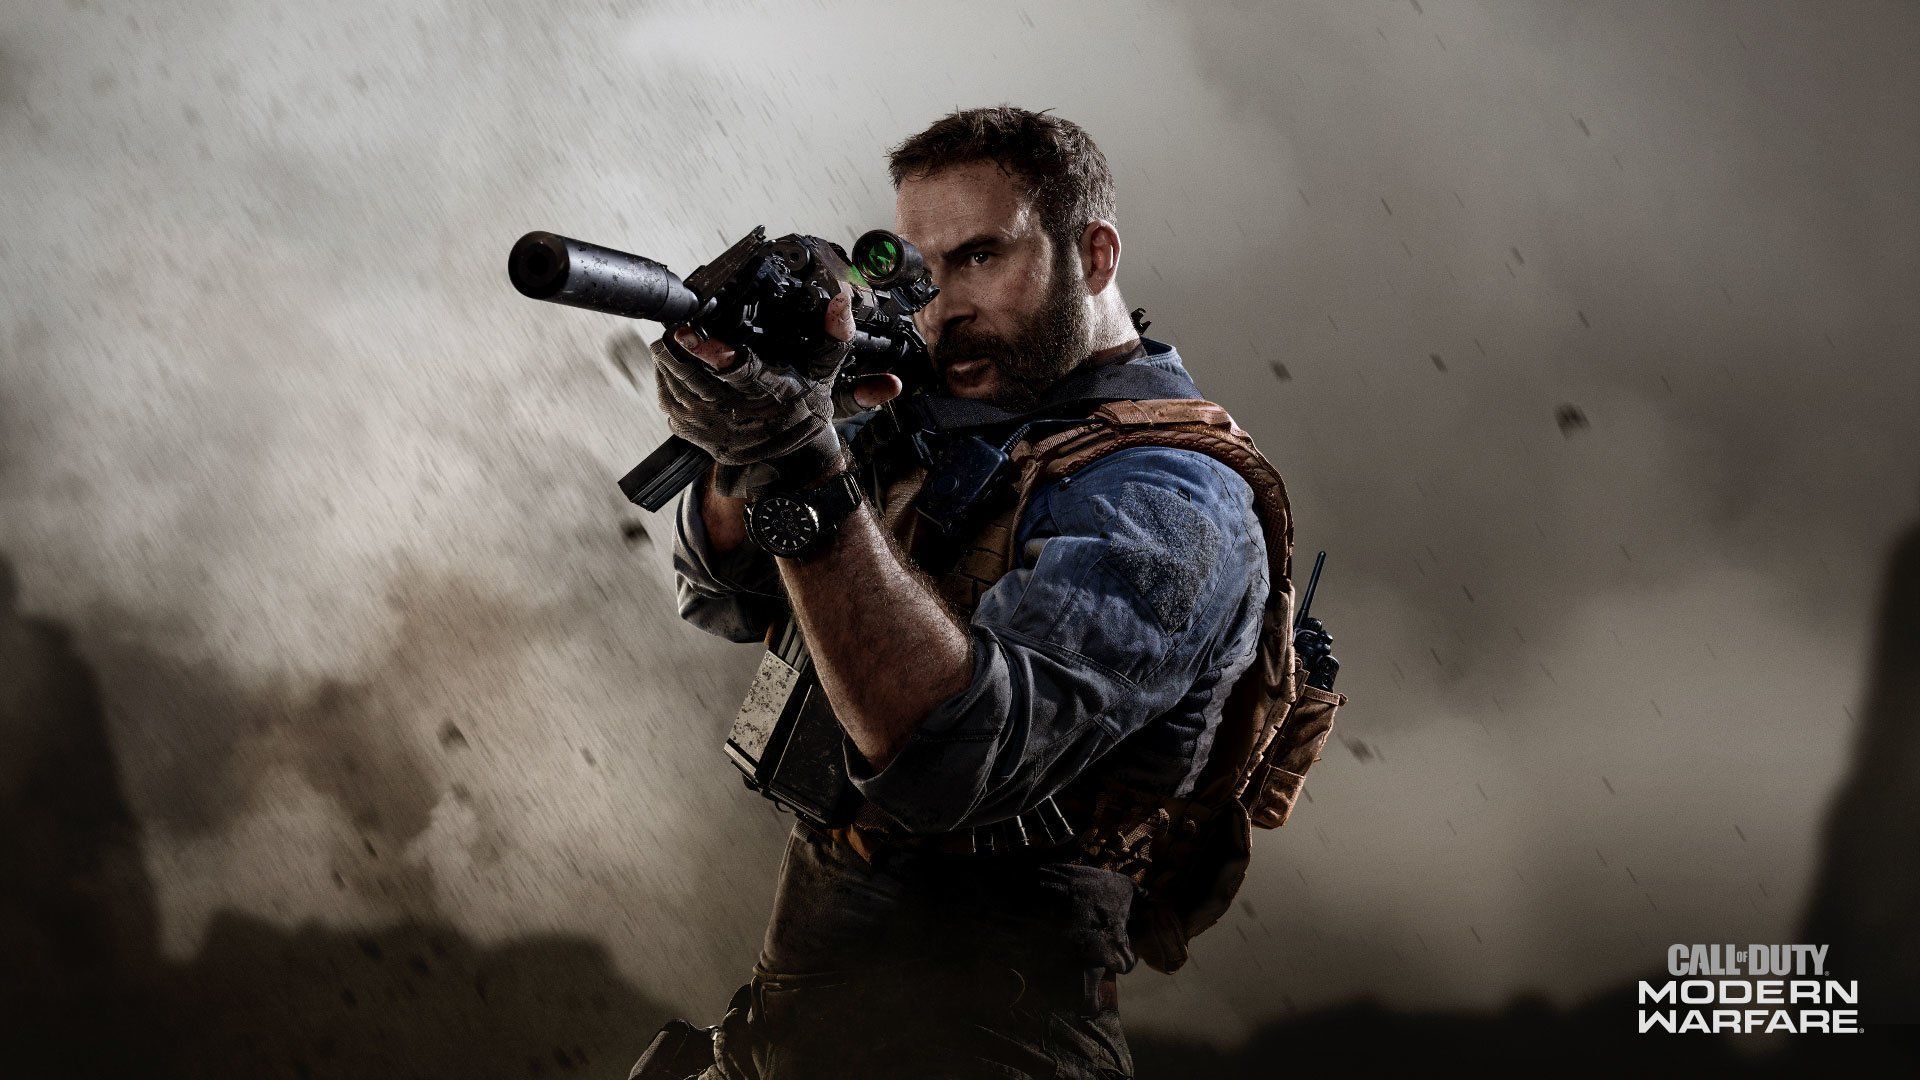 Call of Duty: Modern Warfare Wallpaper Free Call of Duty